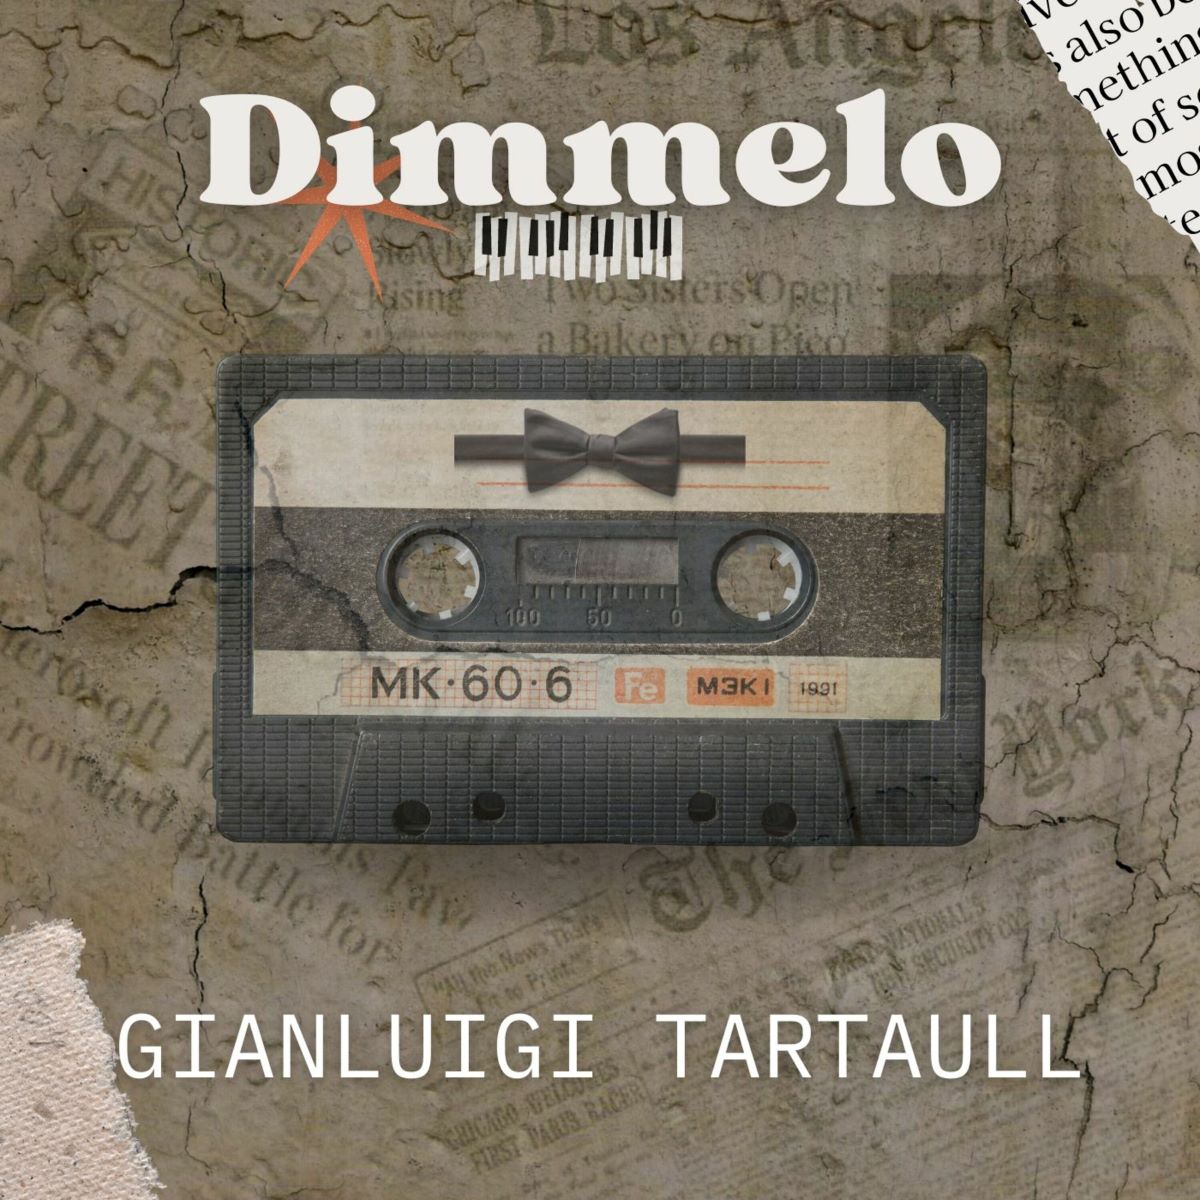 Gianluigi Tartaull - Il singolo “Dimmelo”